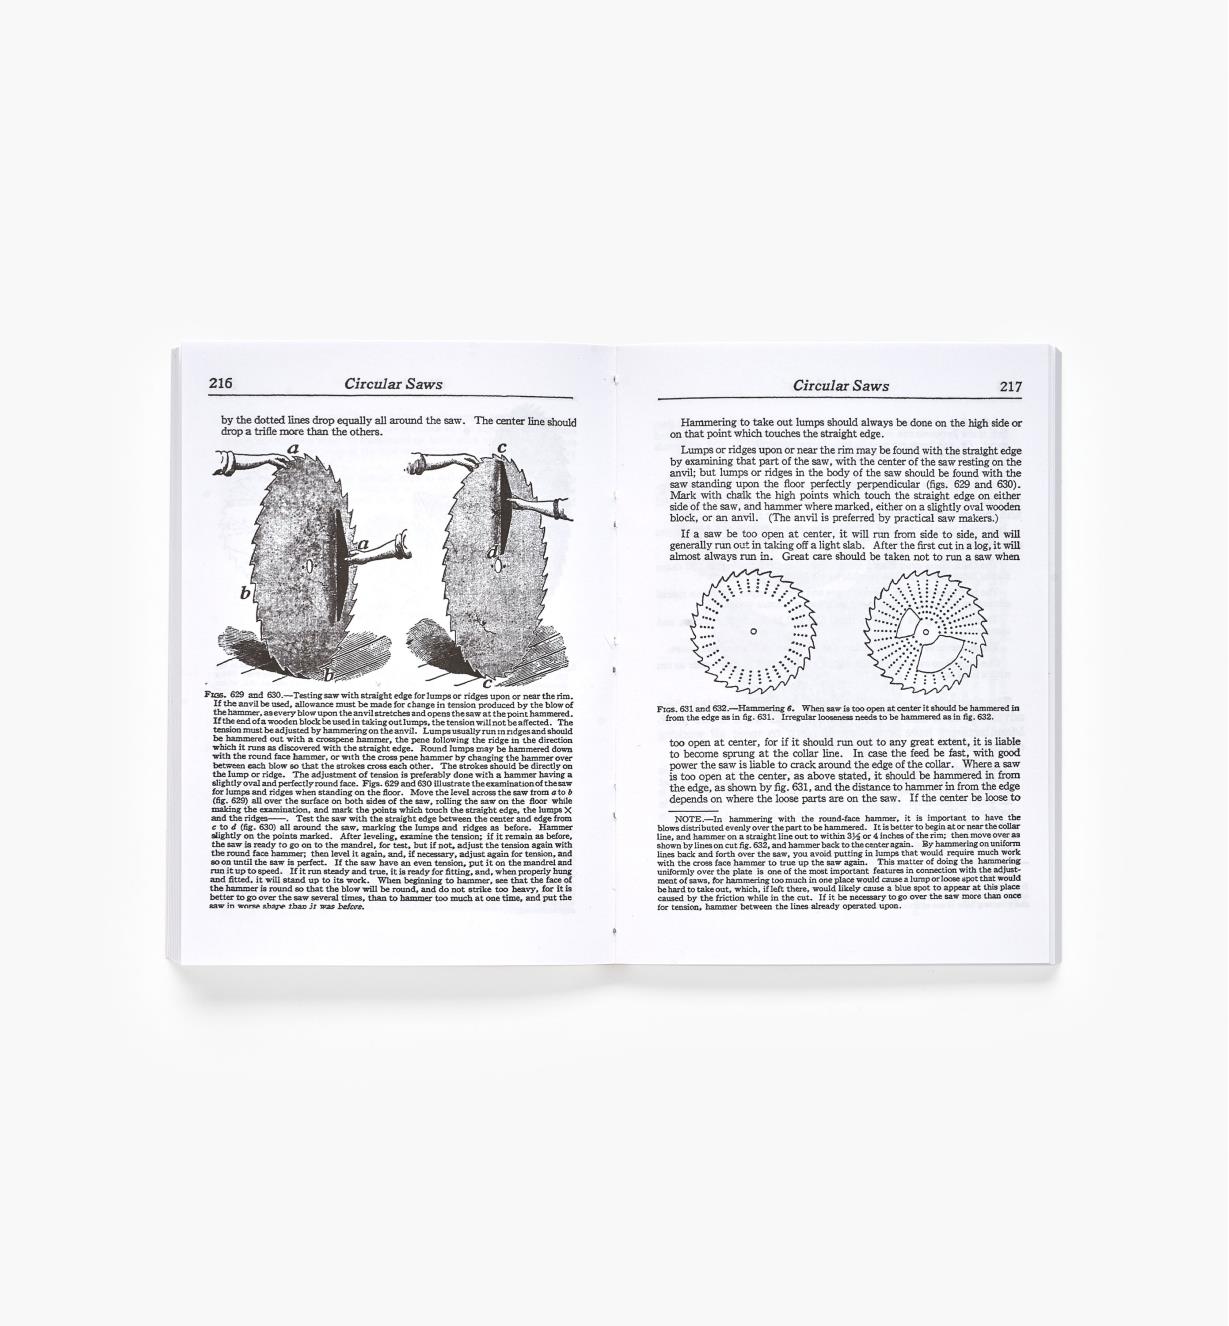 49L8137 - Audels Carpenters andBuilders Guide, Vols. 1 4